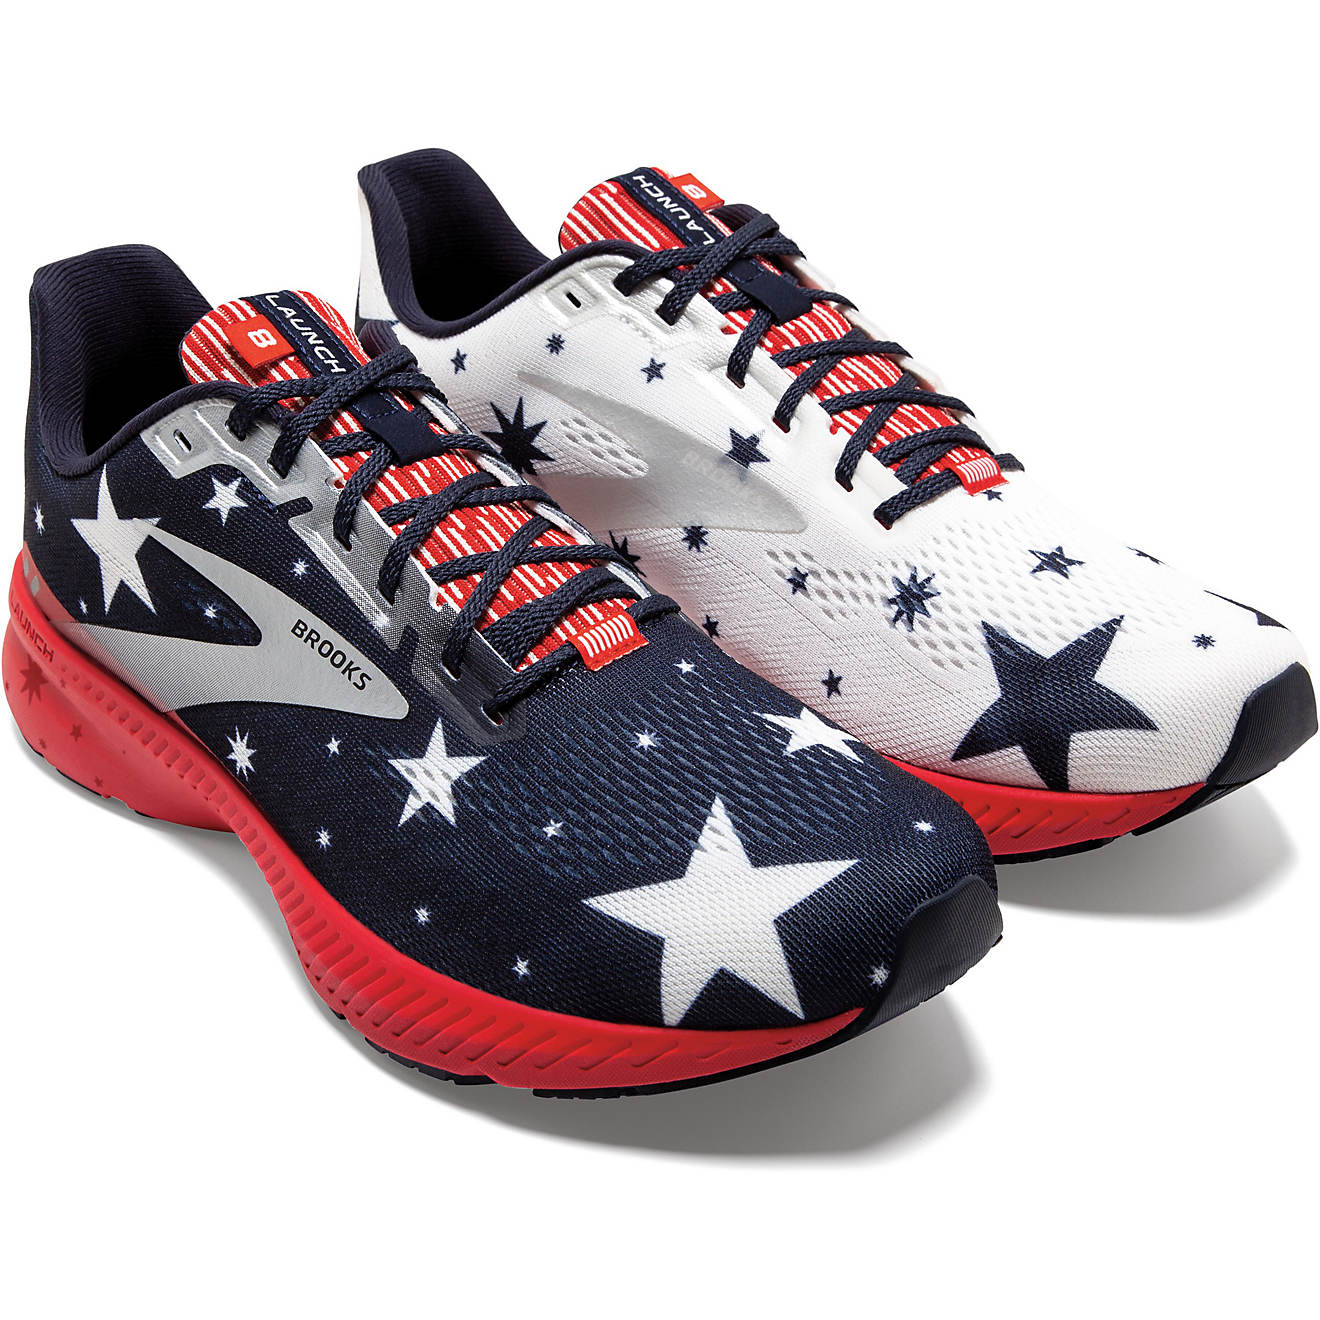 American athletic shoe